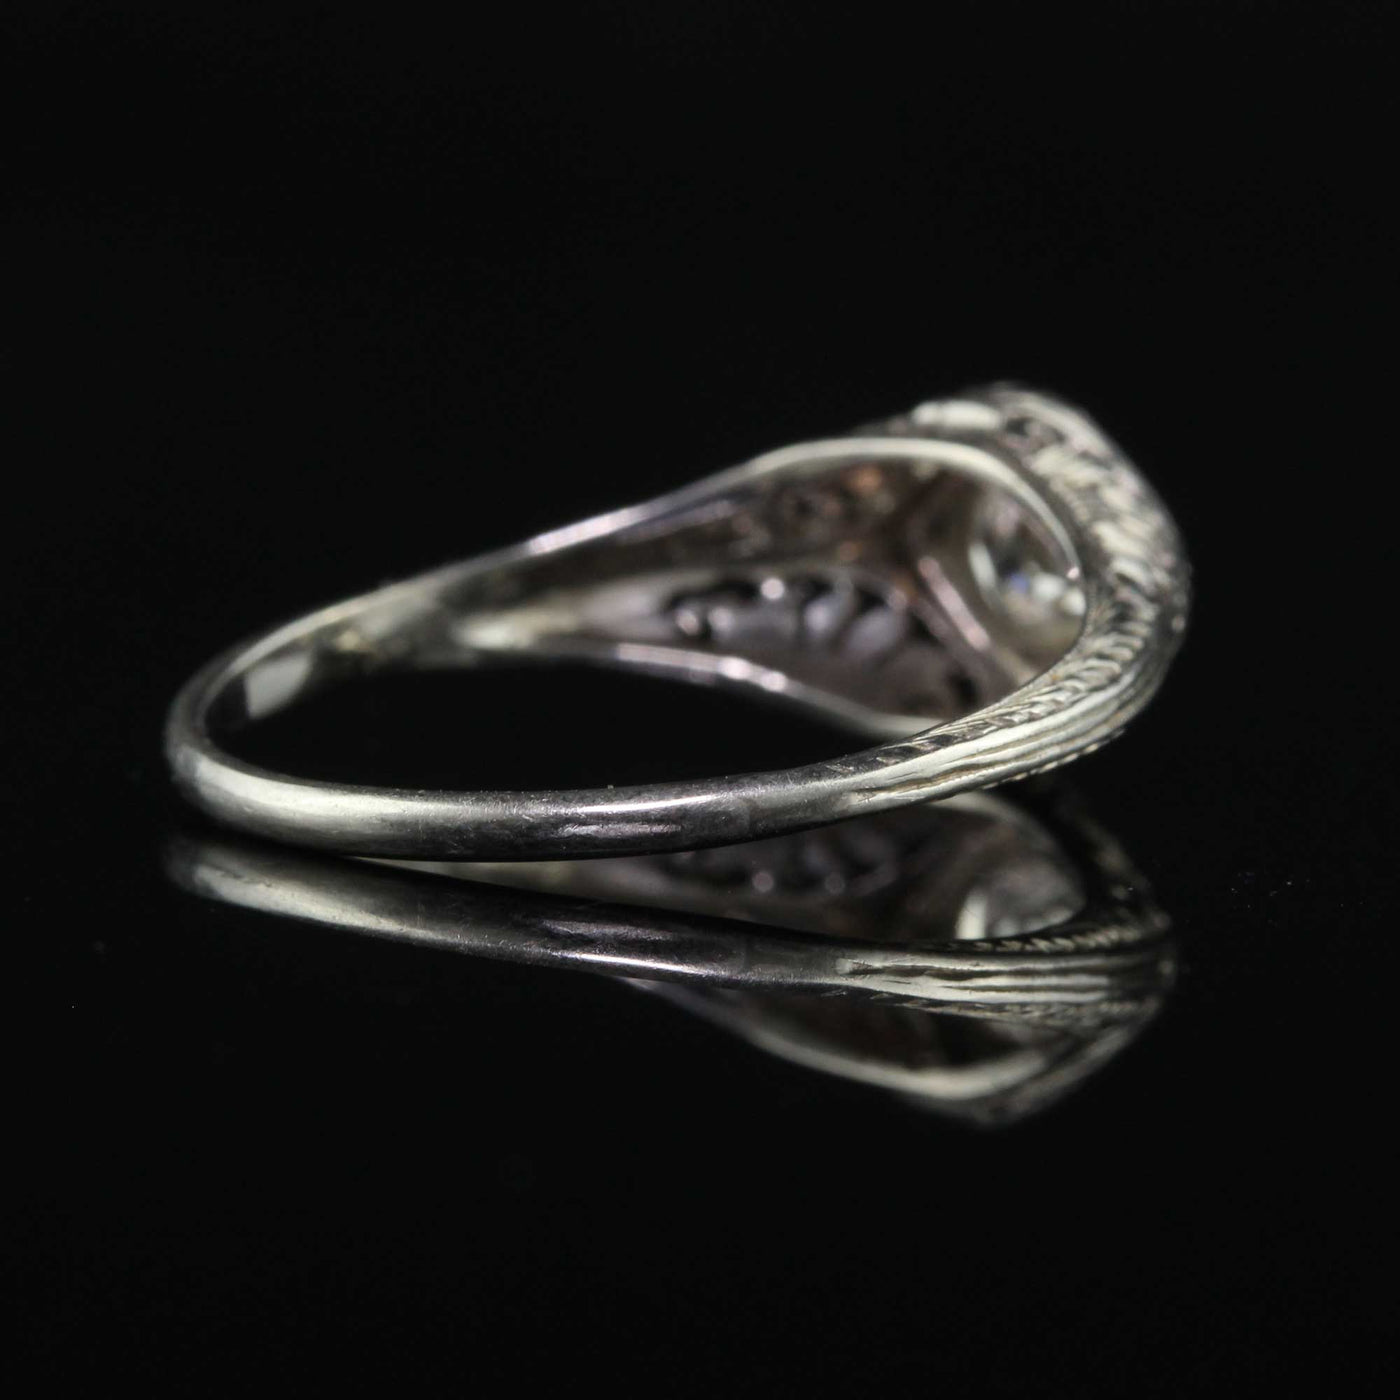 Antique Edwardian Platinum Old European Diamond Filigree Engagement Ring